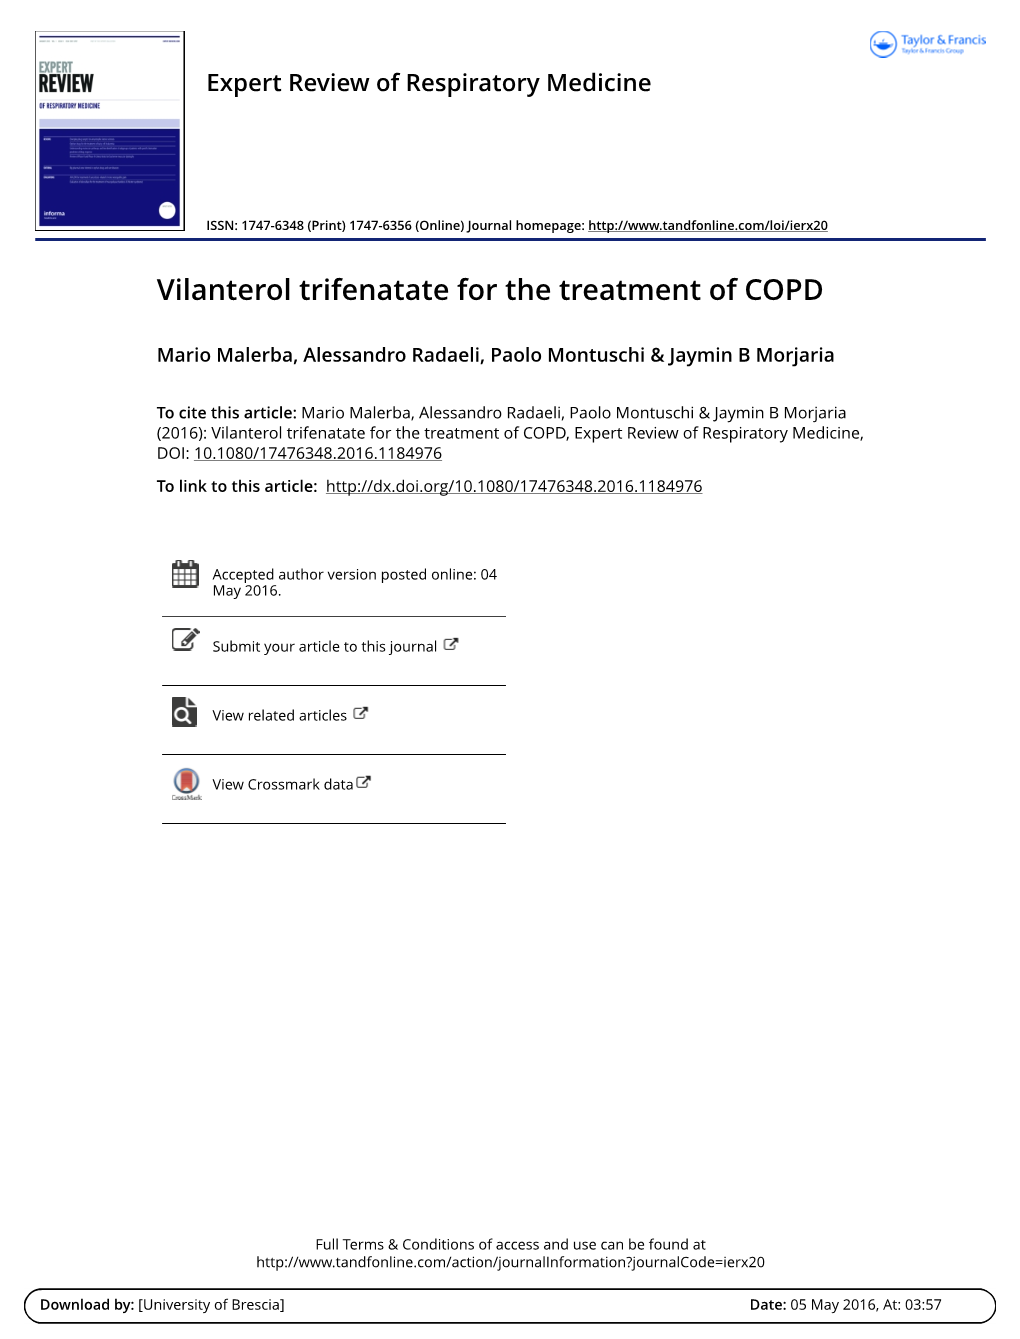 Vilanterol Trifenatate for the Treatment of COPD